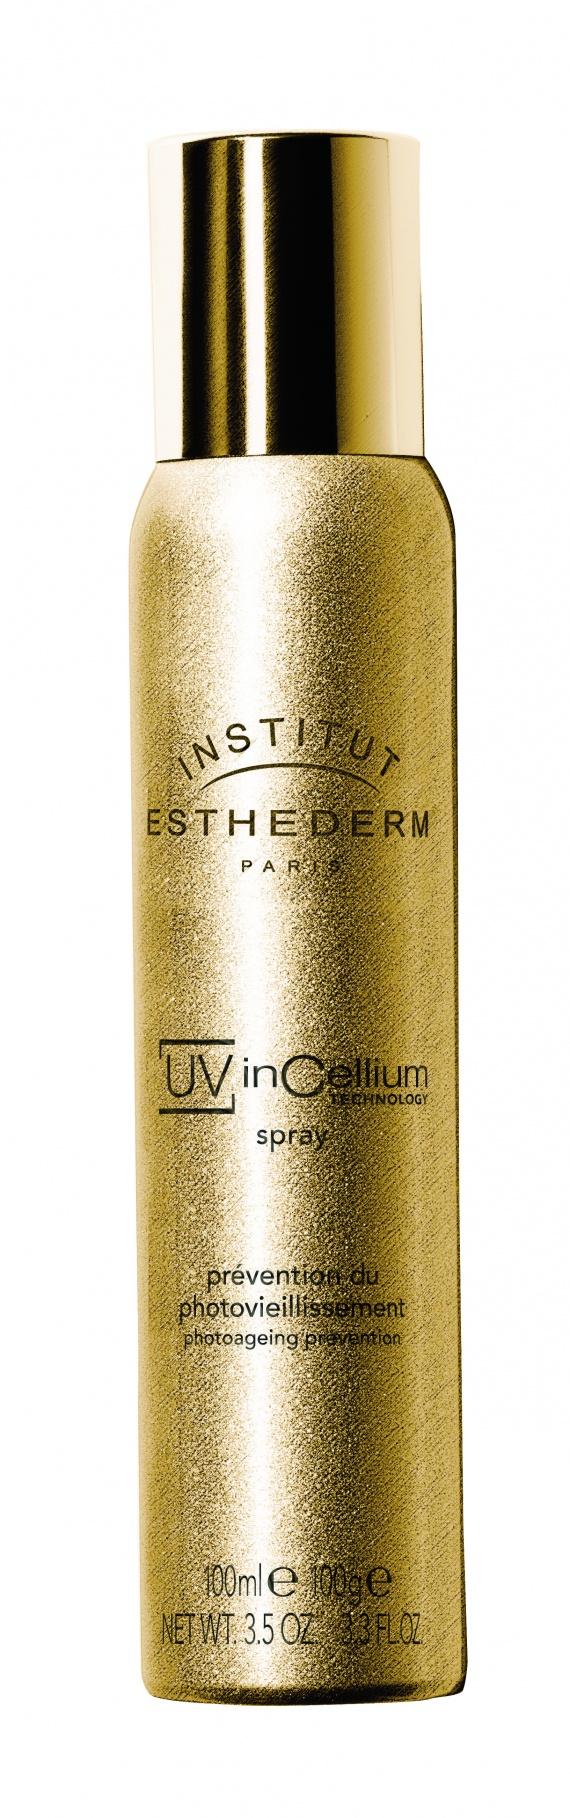 spray-uvincellium Esthederm